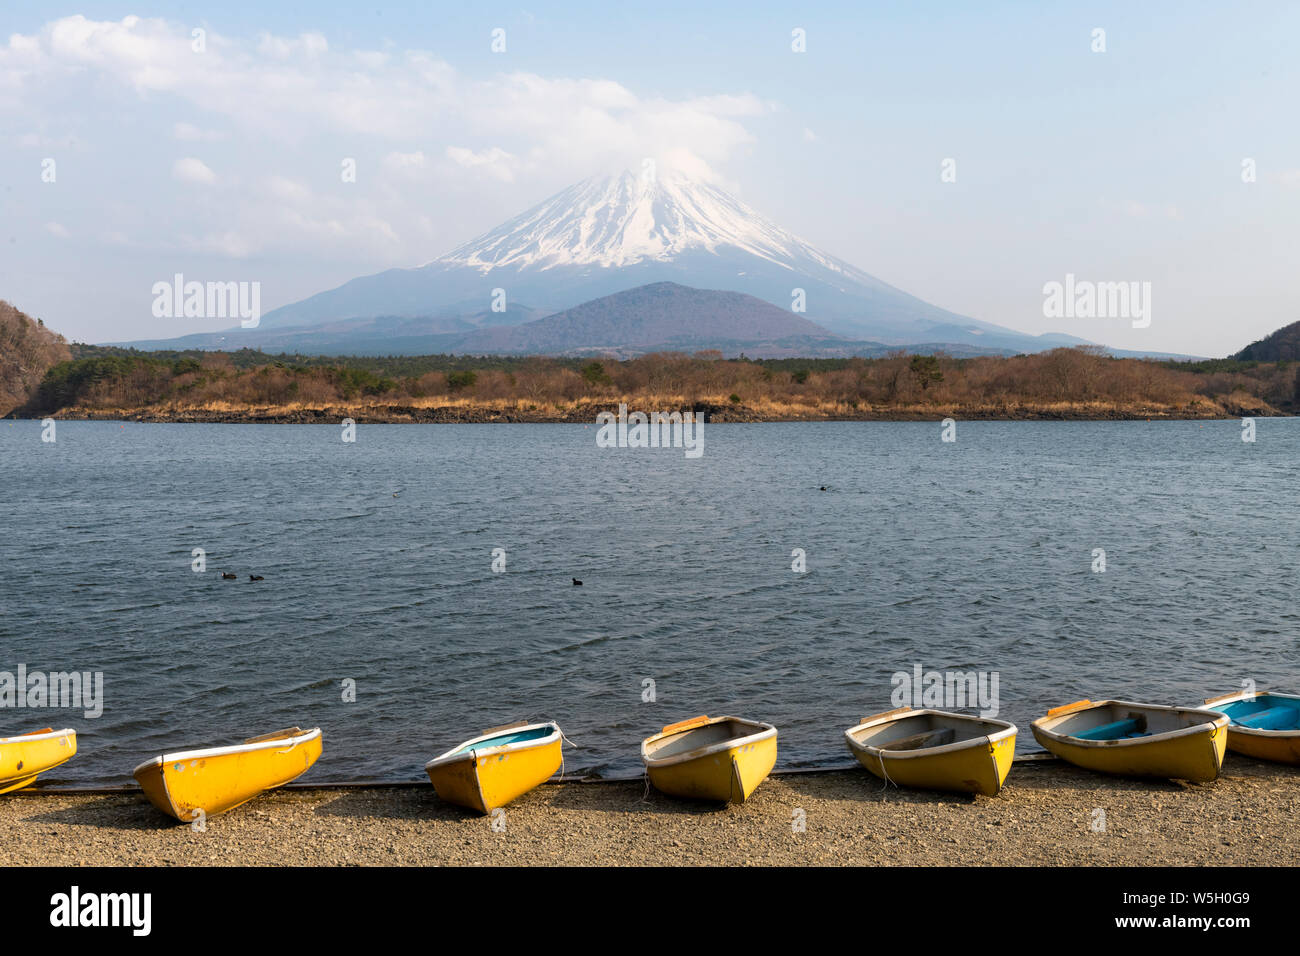 Boats, Lake Shoji, with Mount Fuji in distance, Japan, Asia Stock Photo